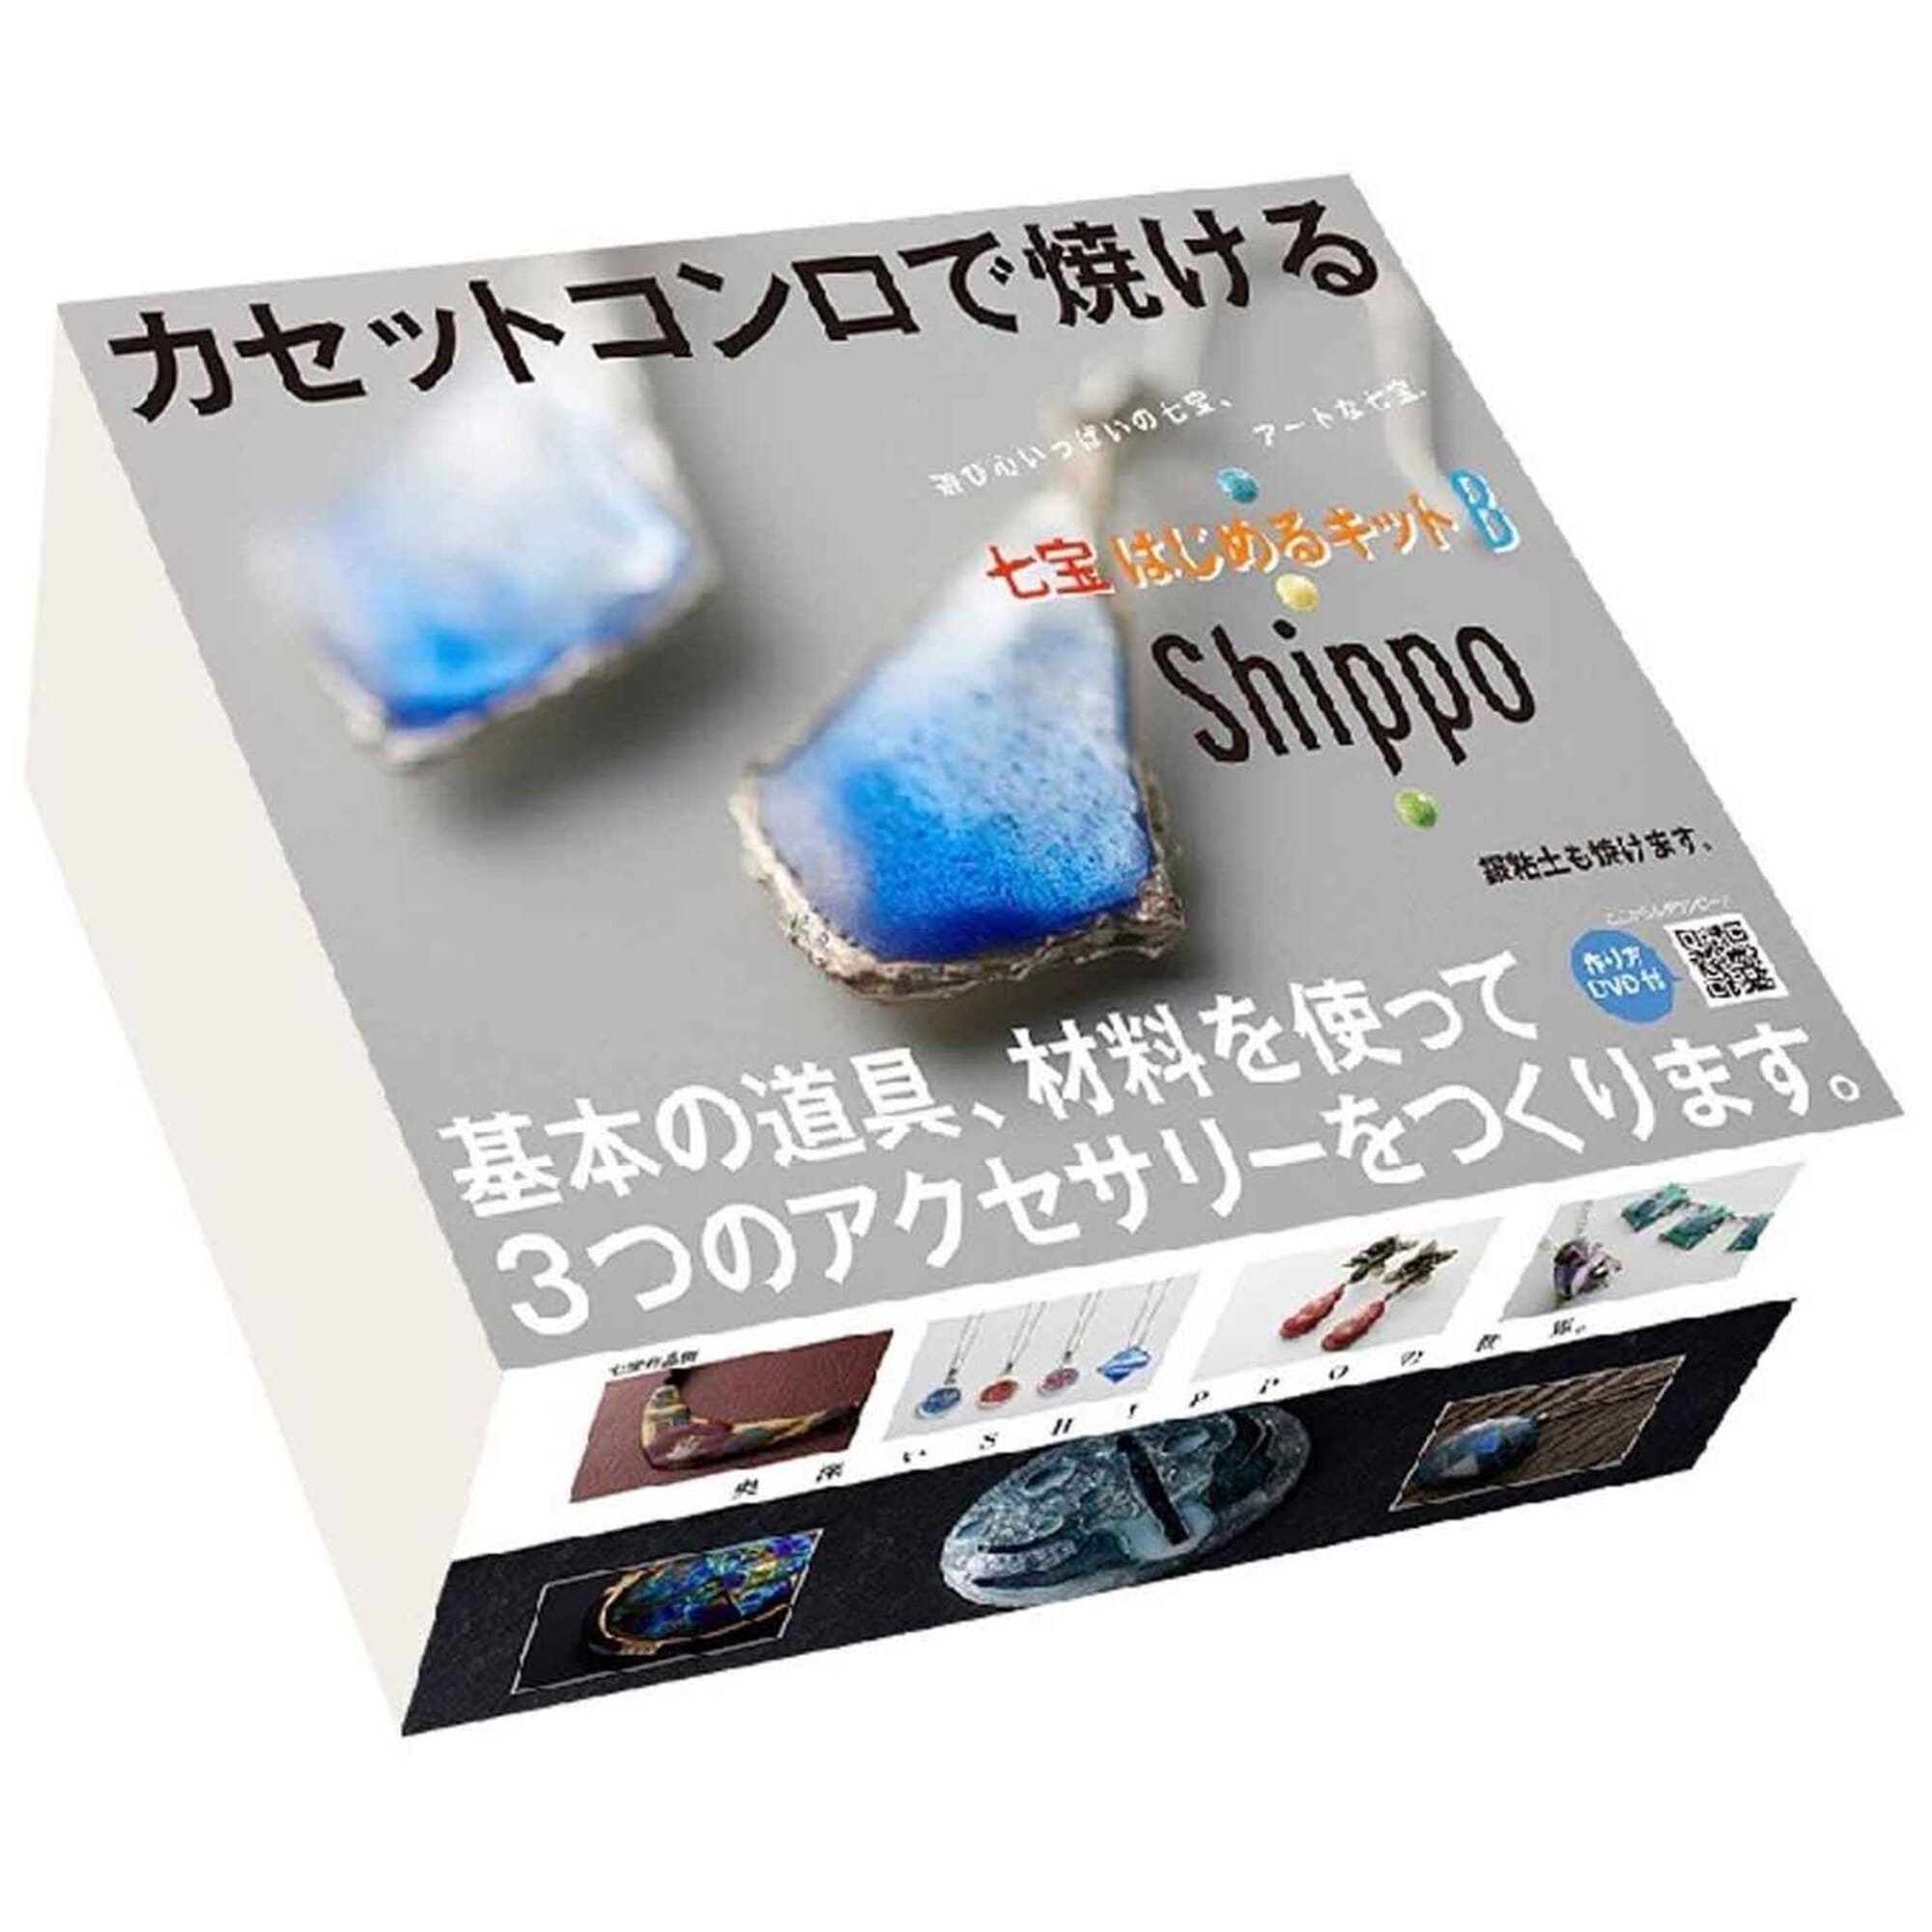 Nitto Gakku Japanese 27-Piece Shippo Cloisonne Enamel Jewellery Craft  Starter Kit Set B, with Instruction Book & DVD, for Jewelry Making